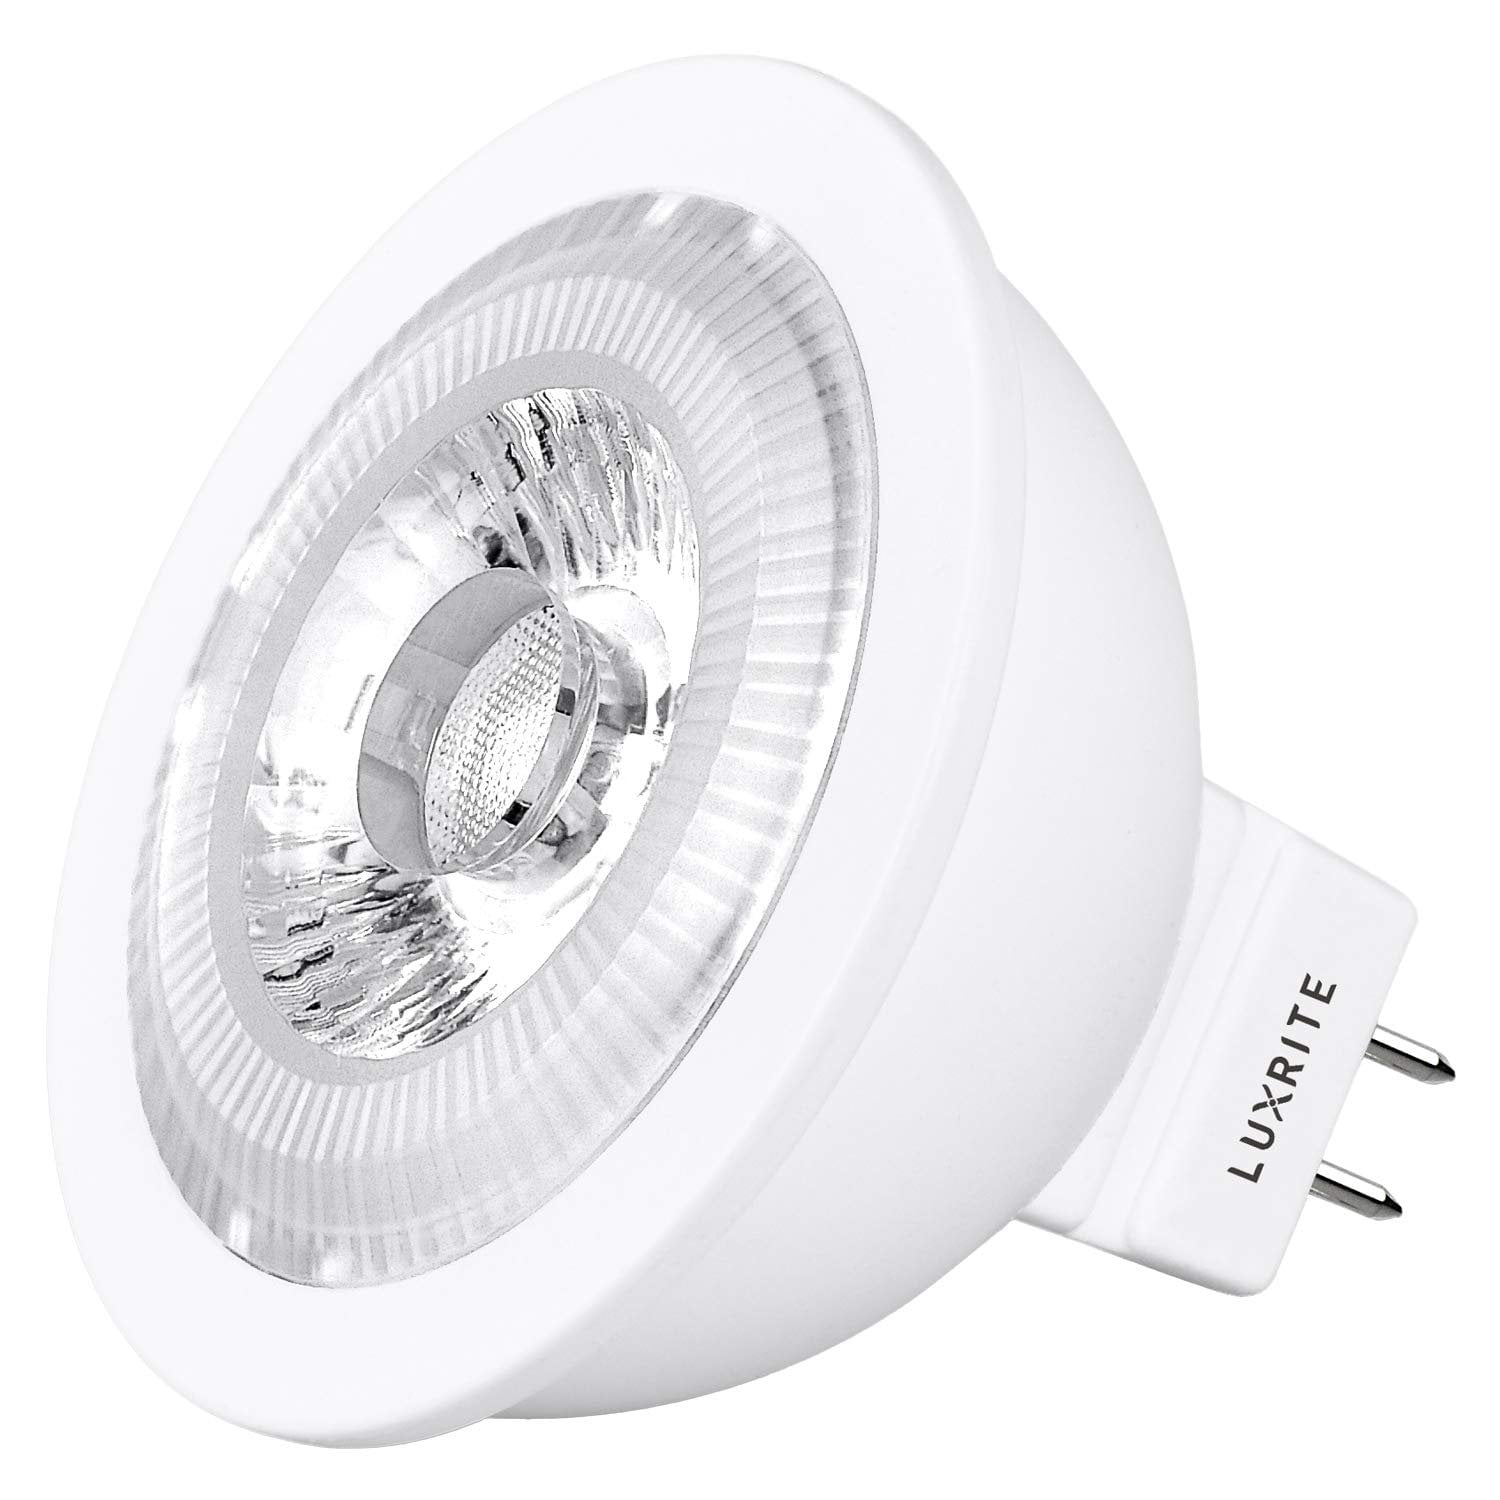 Top Quality MR16 12V LED Spot up light Bulb Lamp 2700K Warm White Dimmable 12PK 